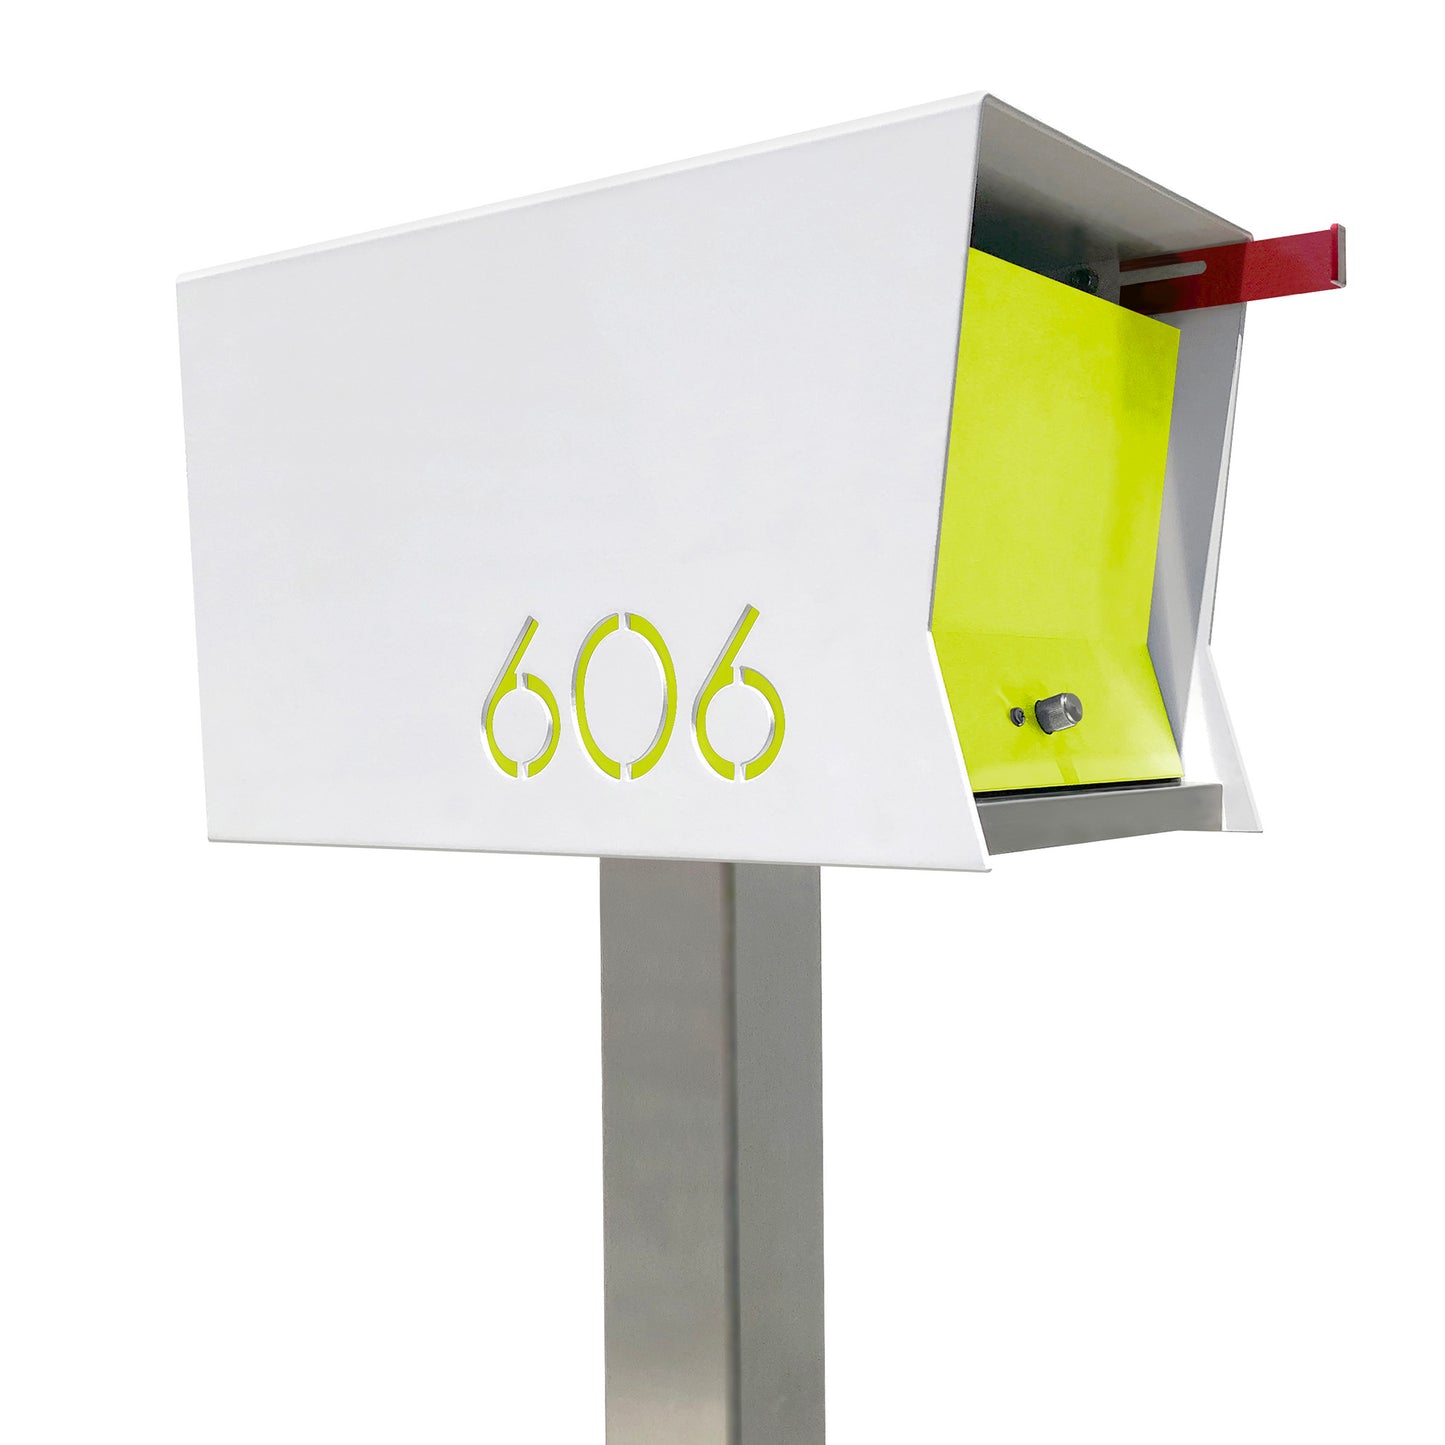 The Original Retrobox in ARCTIC WHITE - Modern Mailbox lime green and white